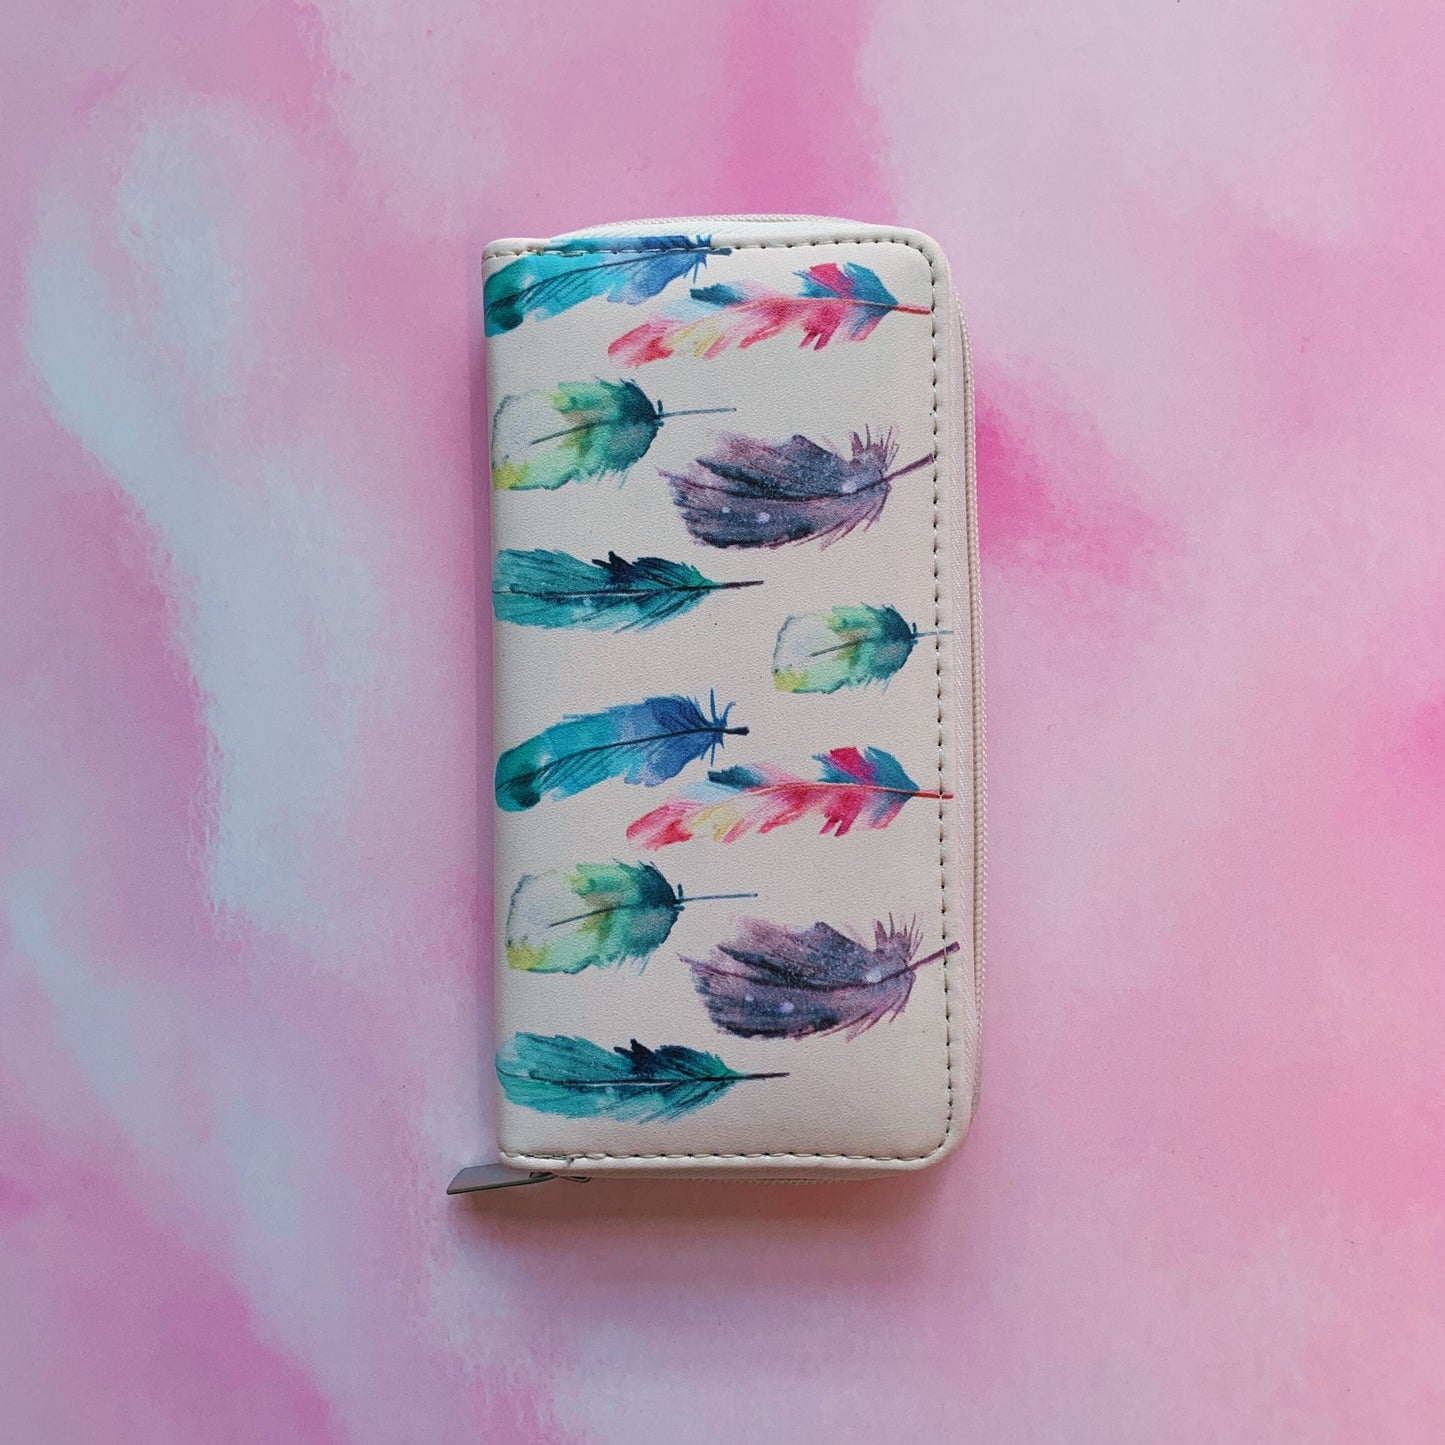 Painted Feathers Women's Zipper Wallet